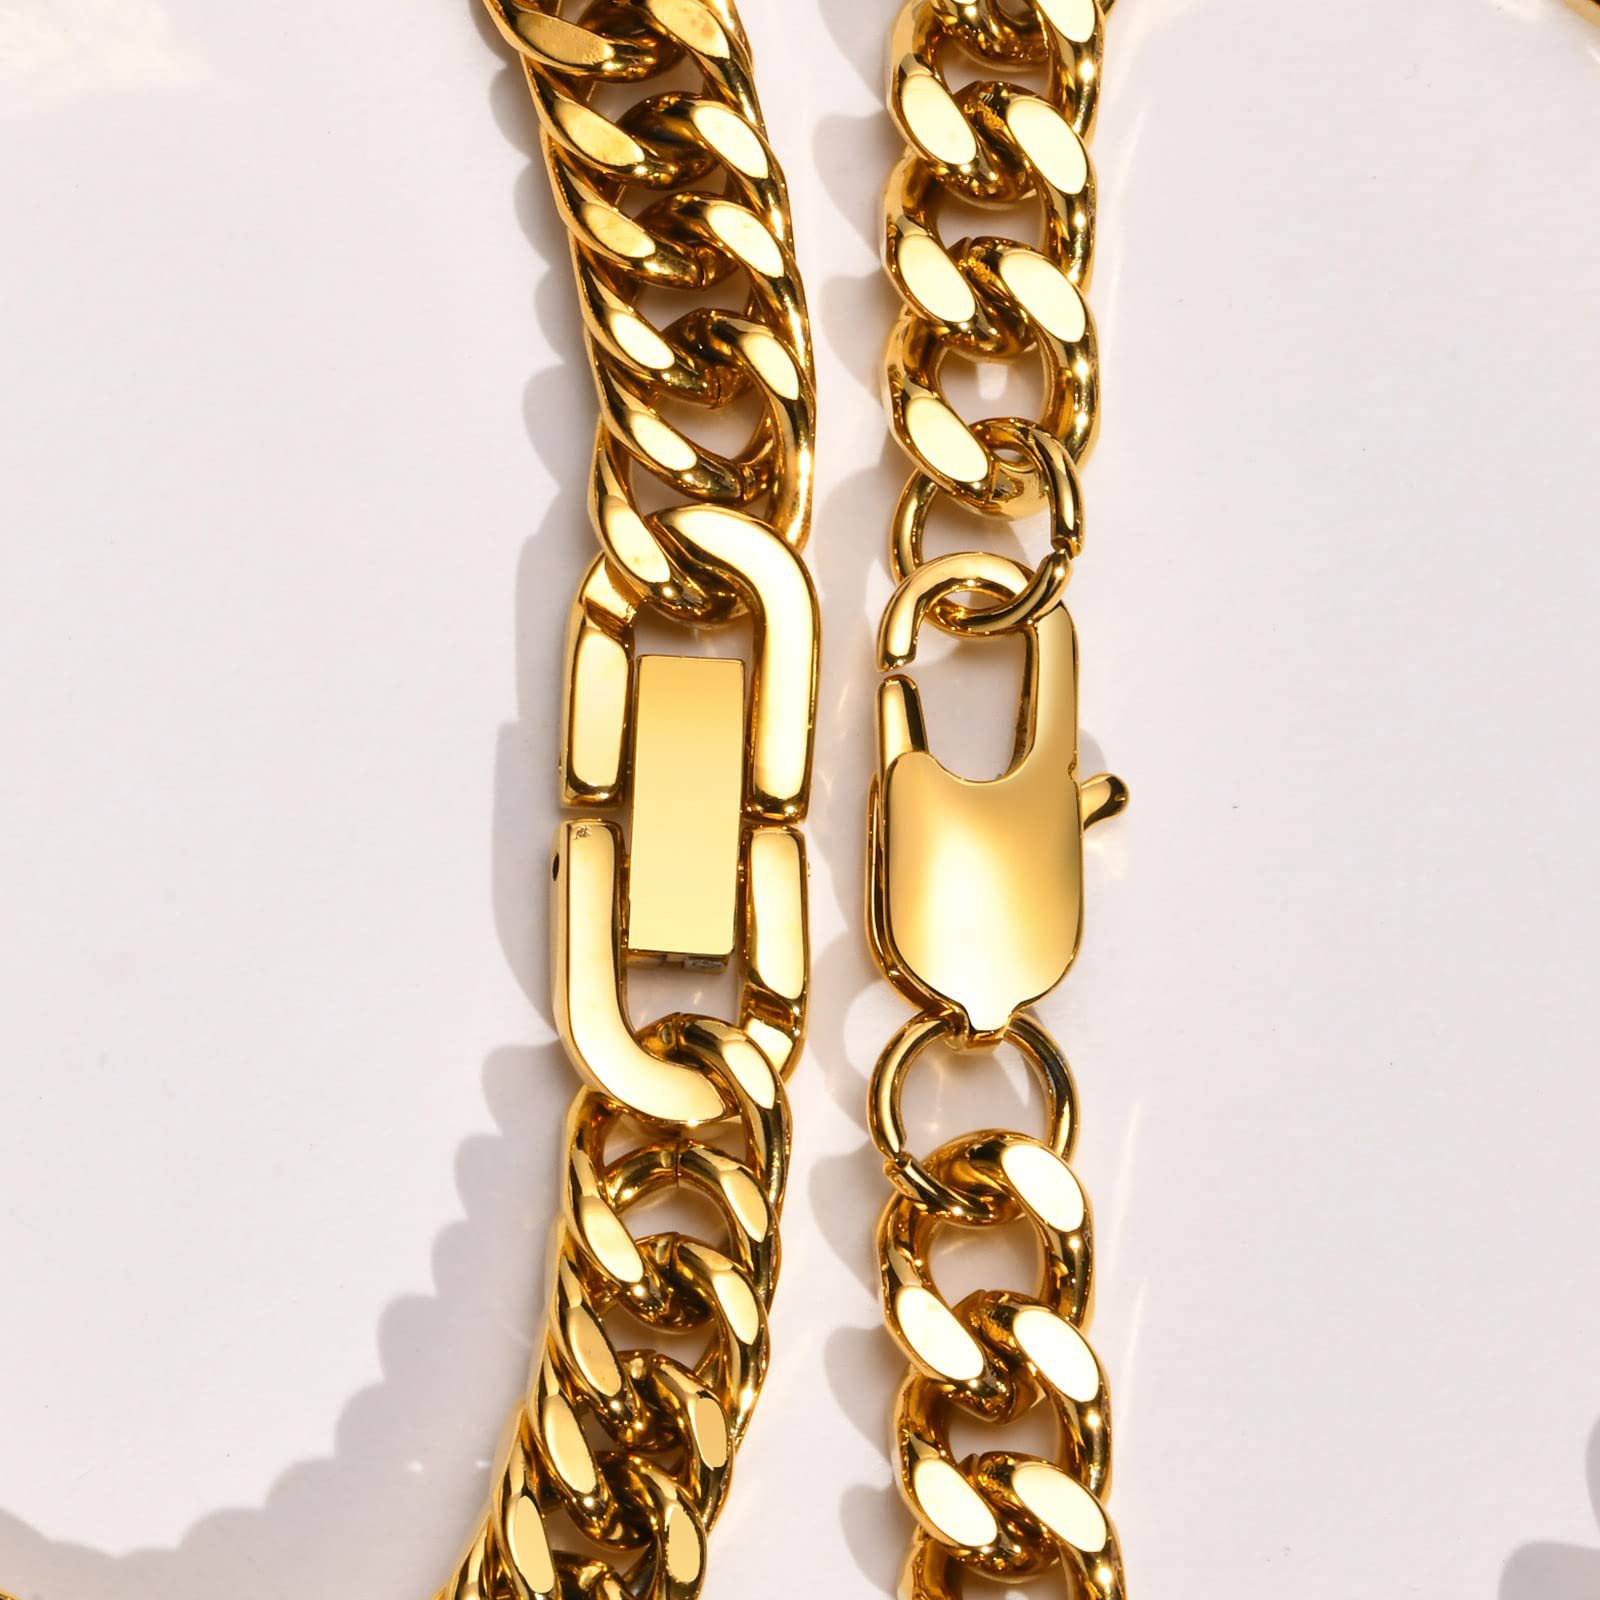 Chain Bracelet - Sturdy Stainless Steel Curb Width Cuban Link Chain Bracelet Set for Men Women,6.5/7/7.4/8.2/9 Inches